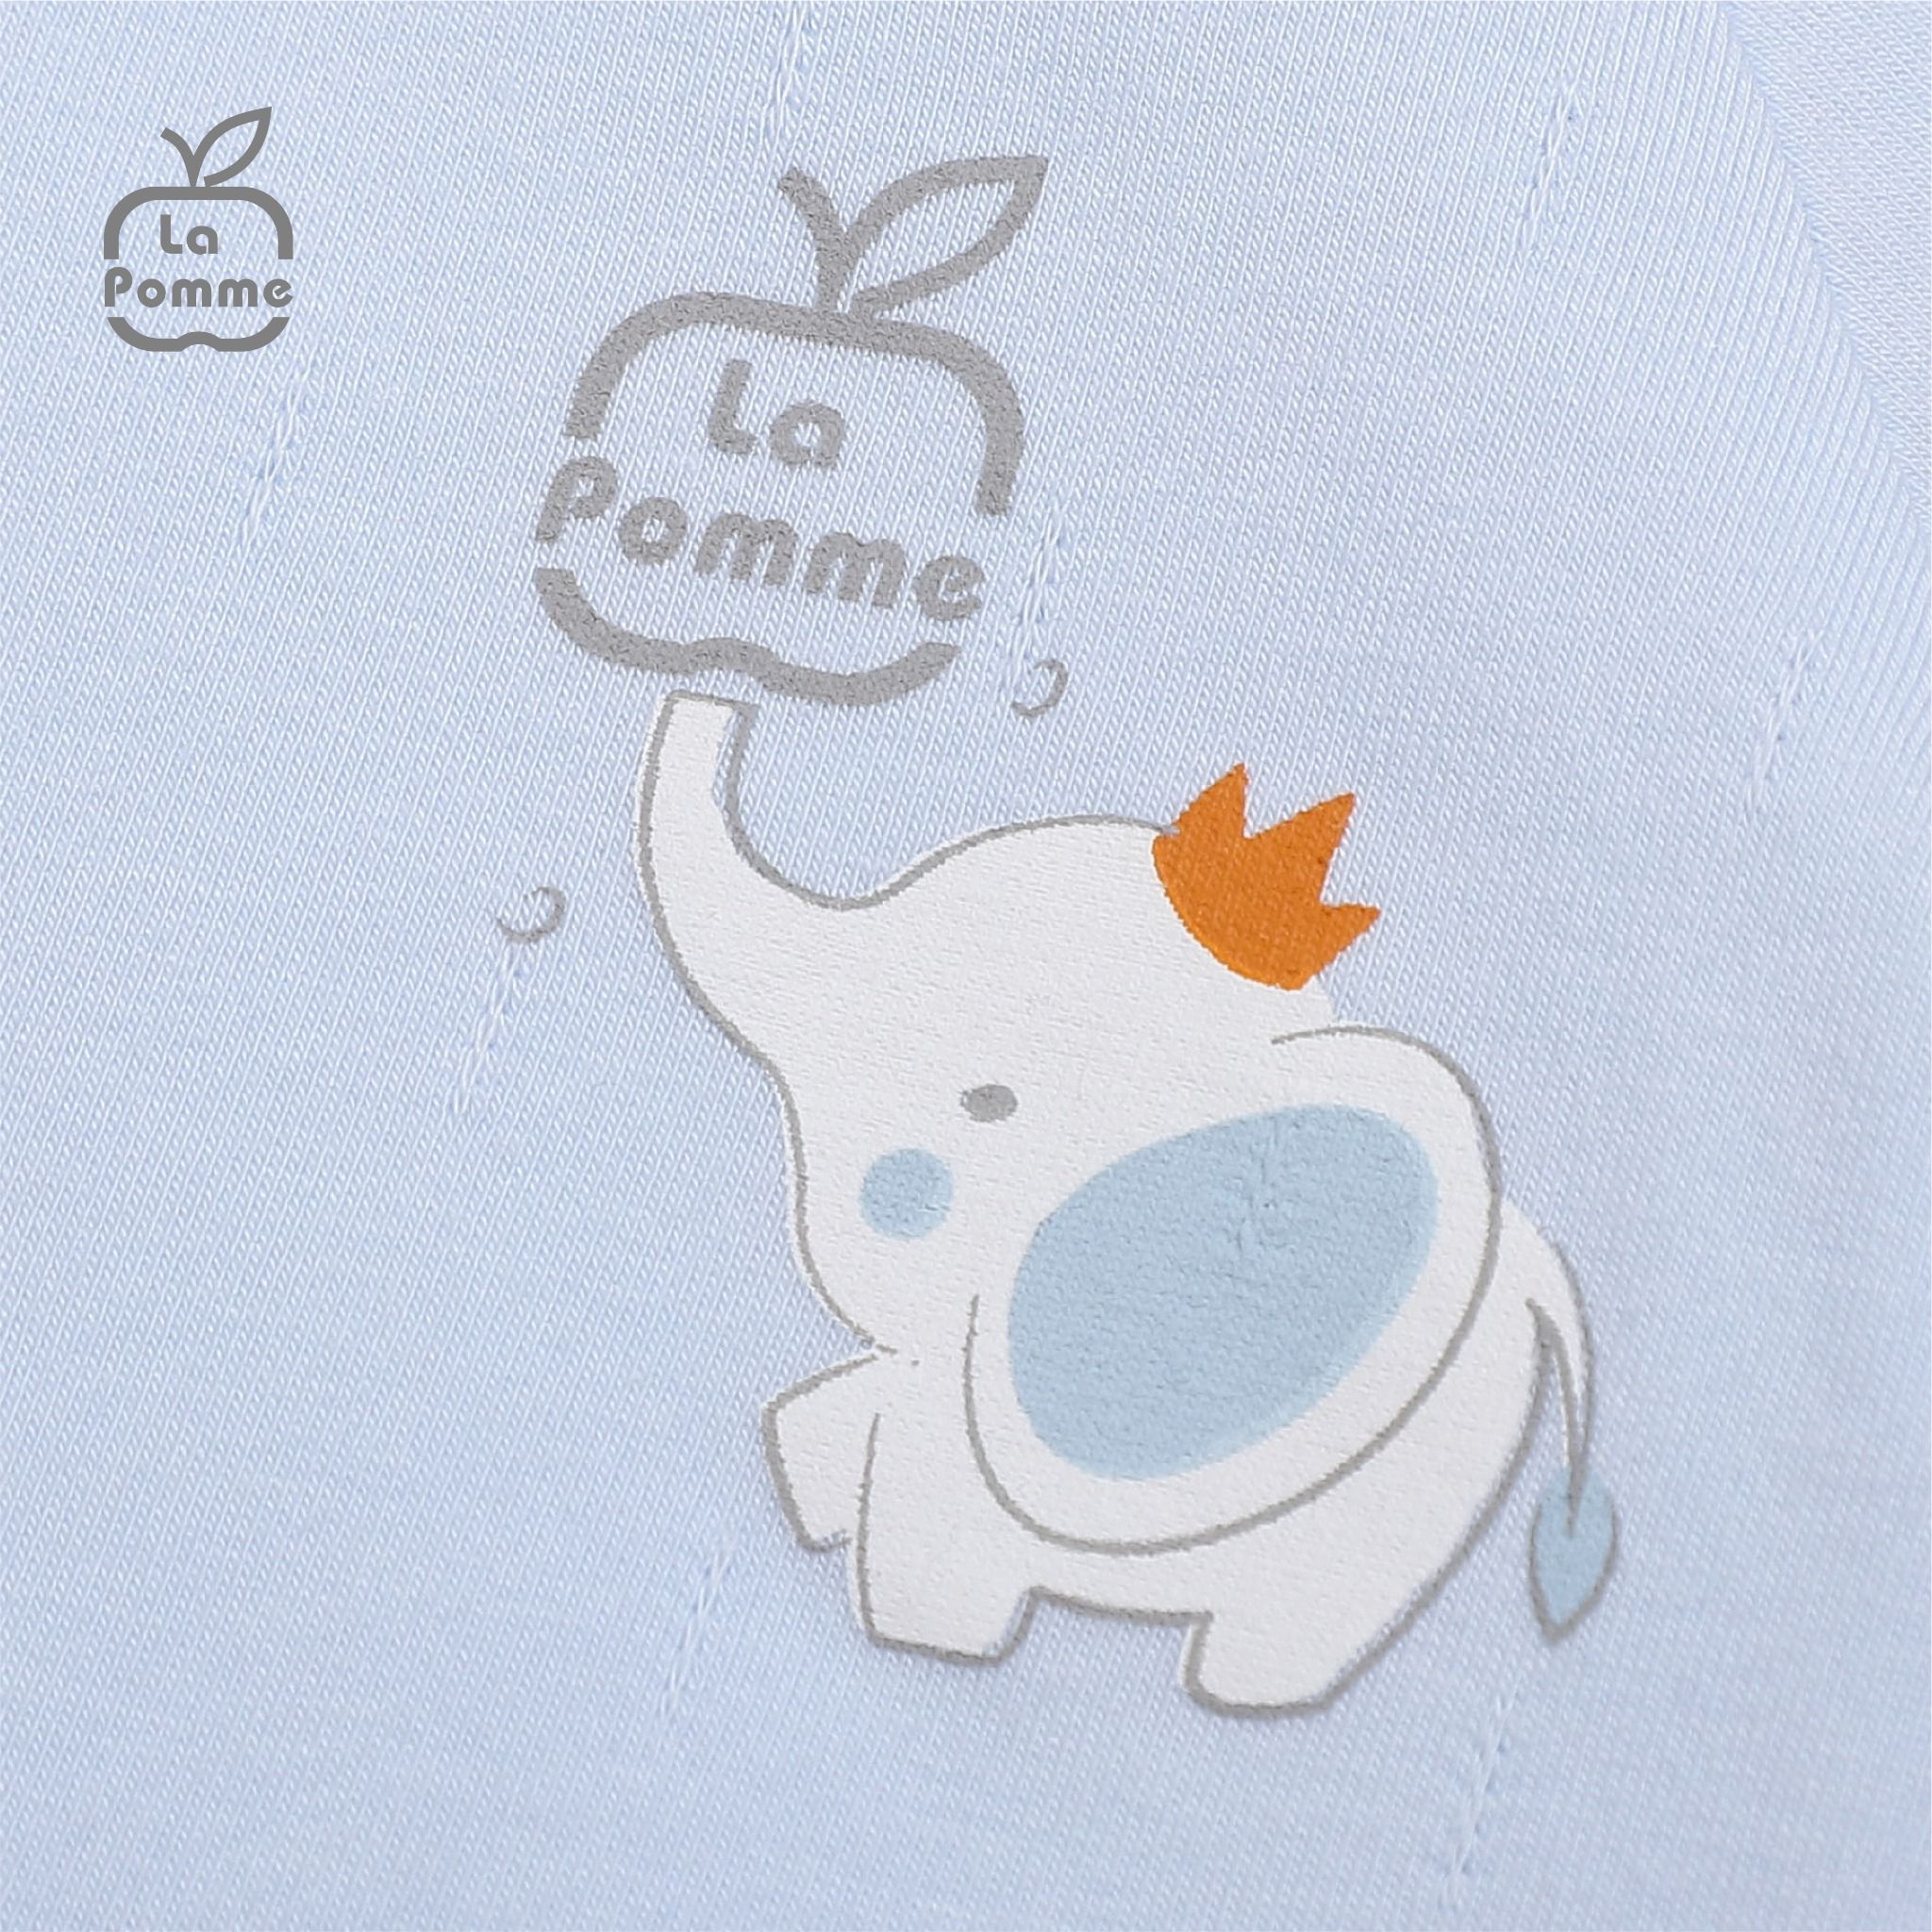  Yếm La Pomme chú voi Dumbo - Hồng 